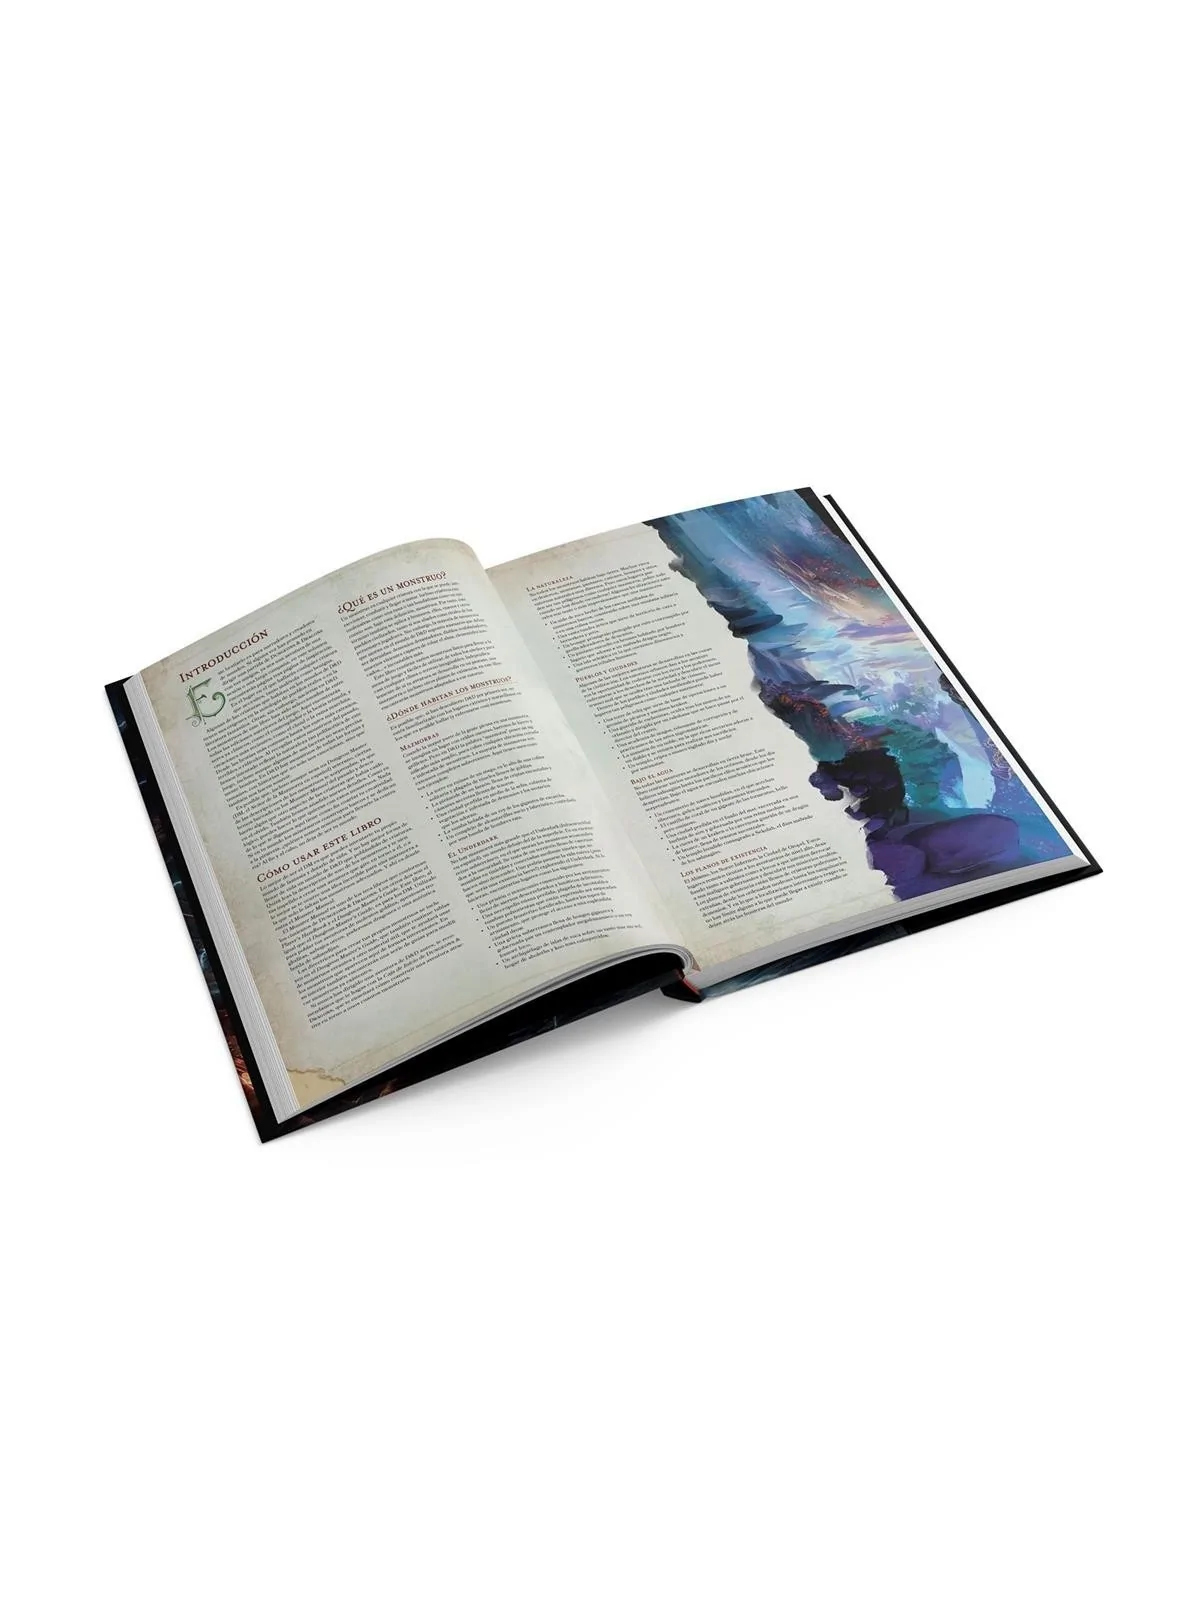 Comprar D&D Monster Manual (Manual de Monstruos) barato al mejor preci